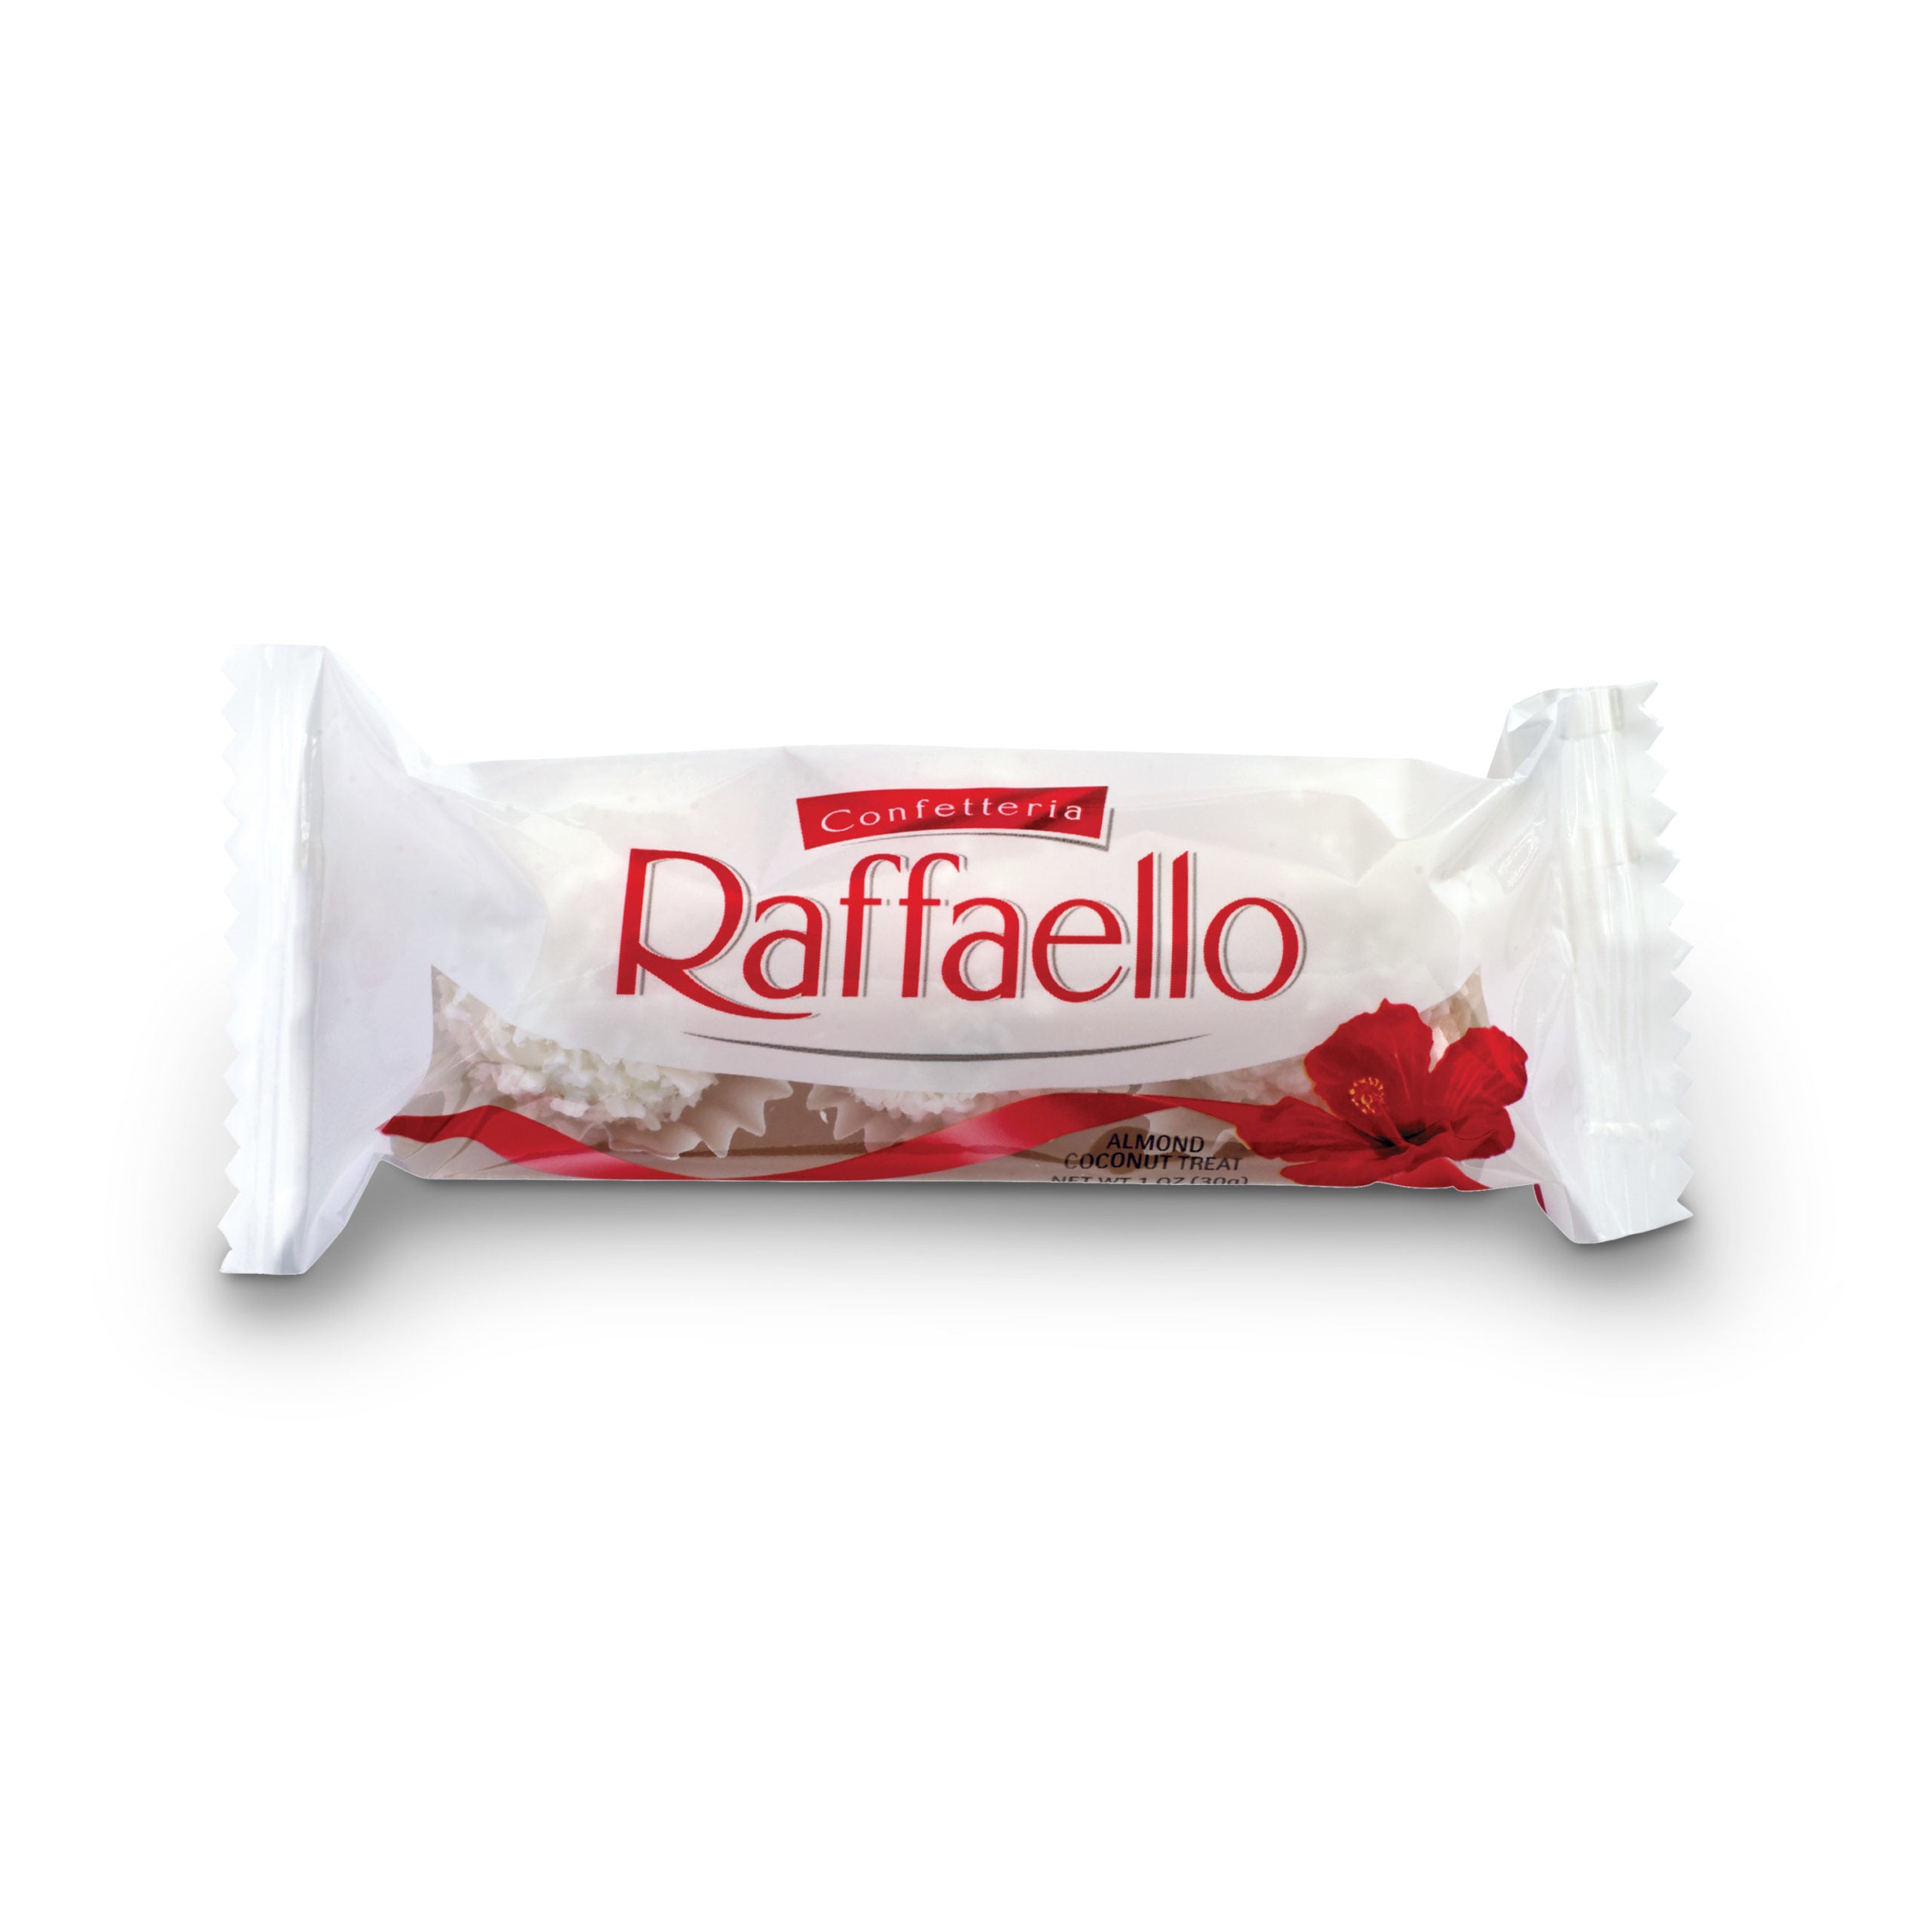 Raffaello – extra365